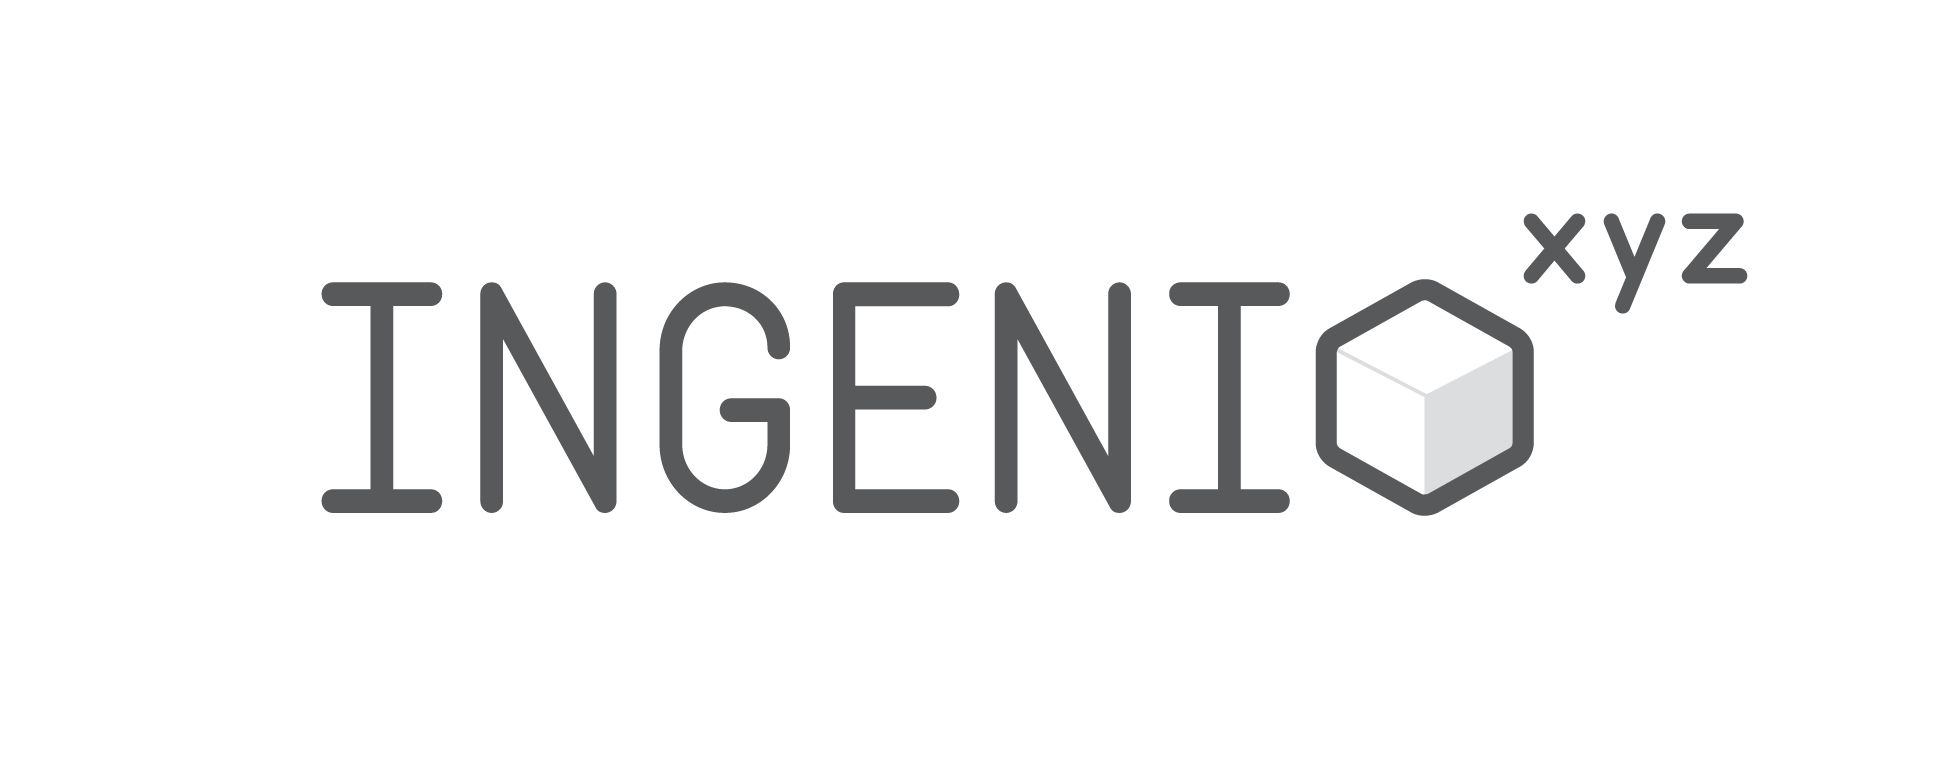 el ingenio Logo photo - 1